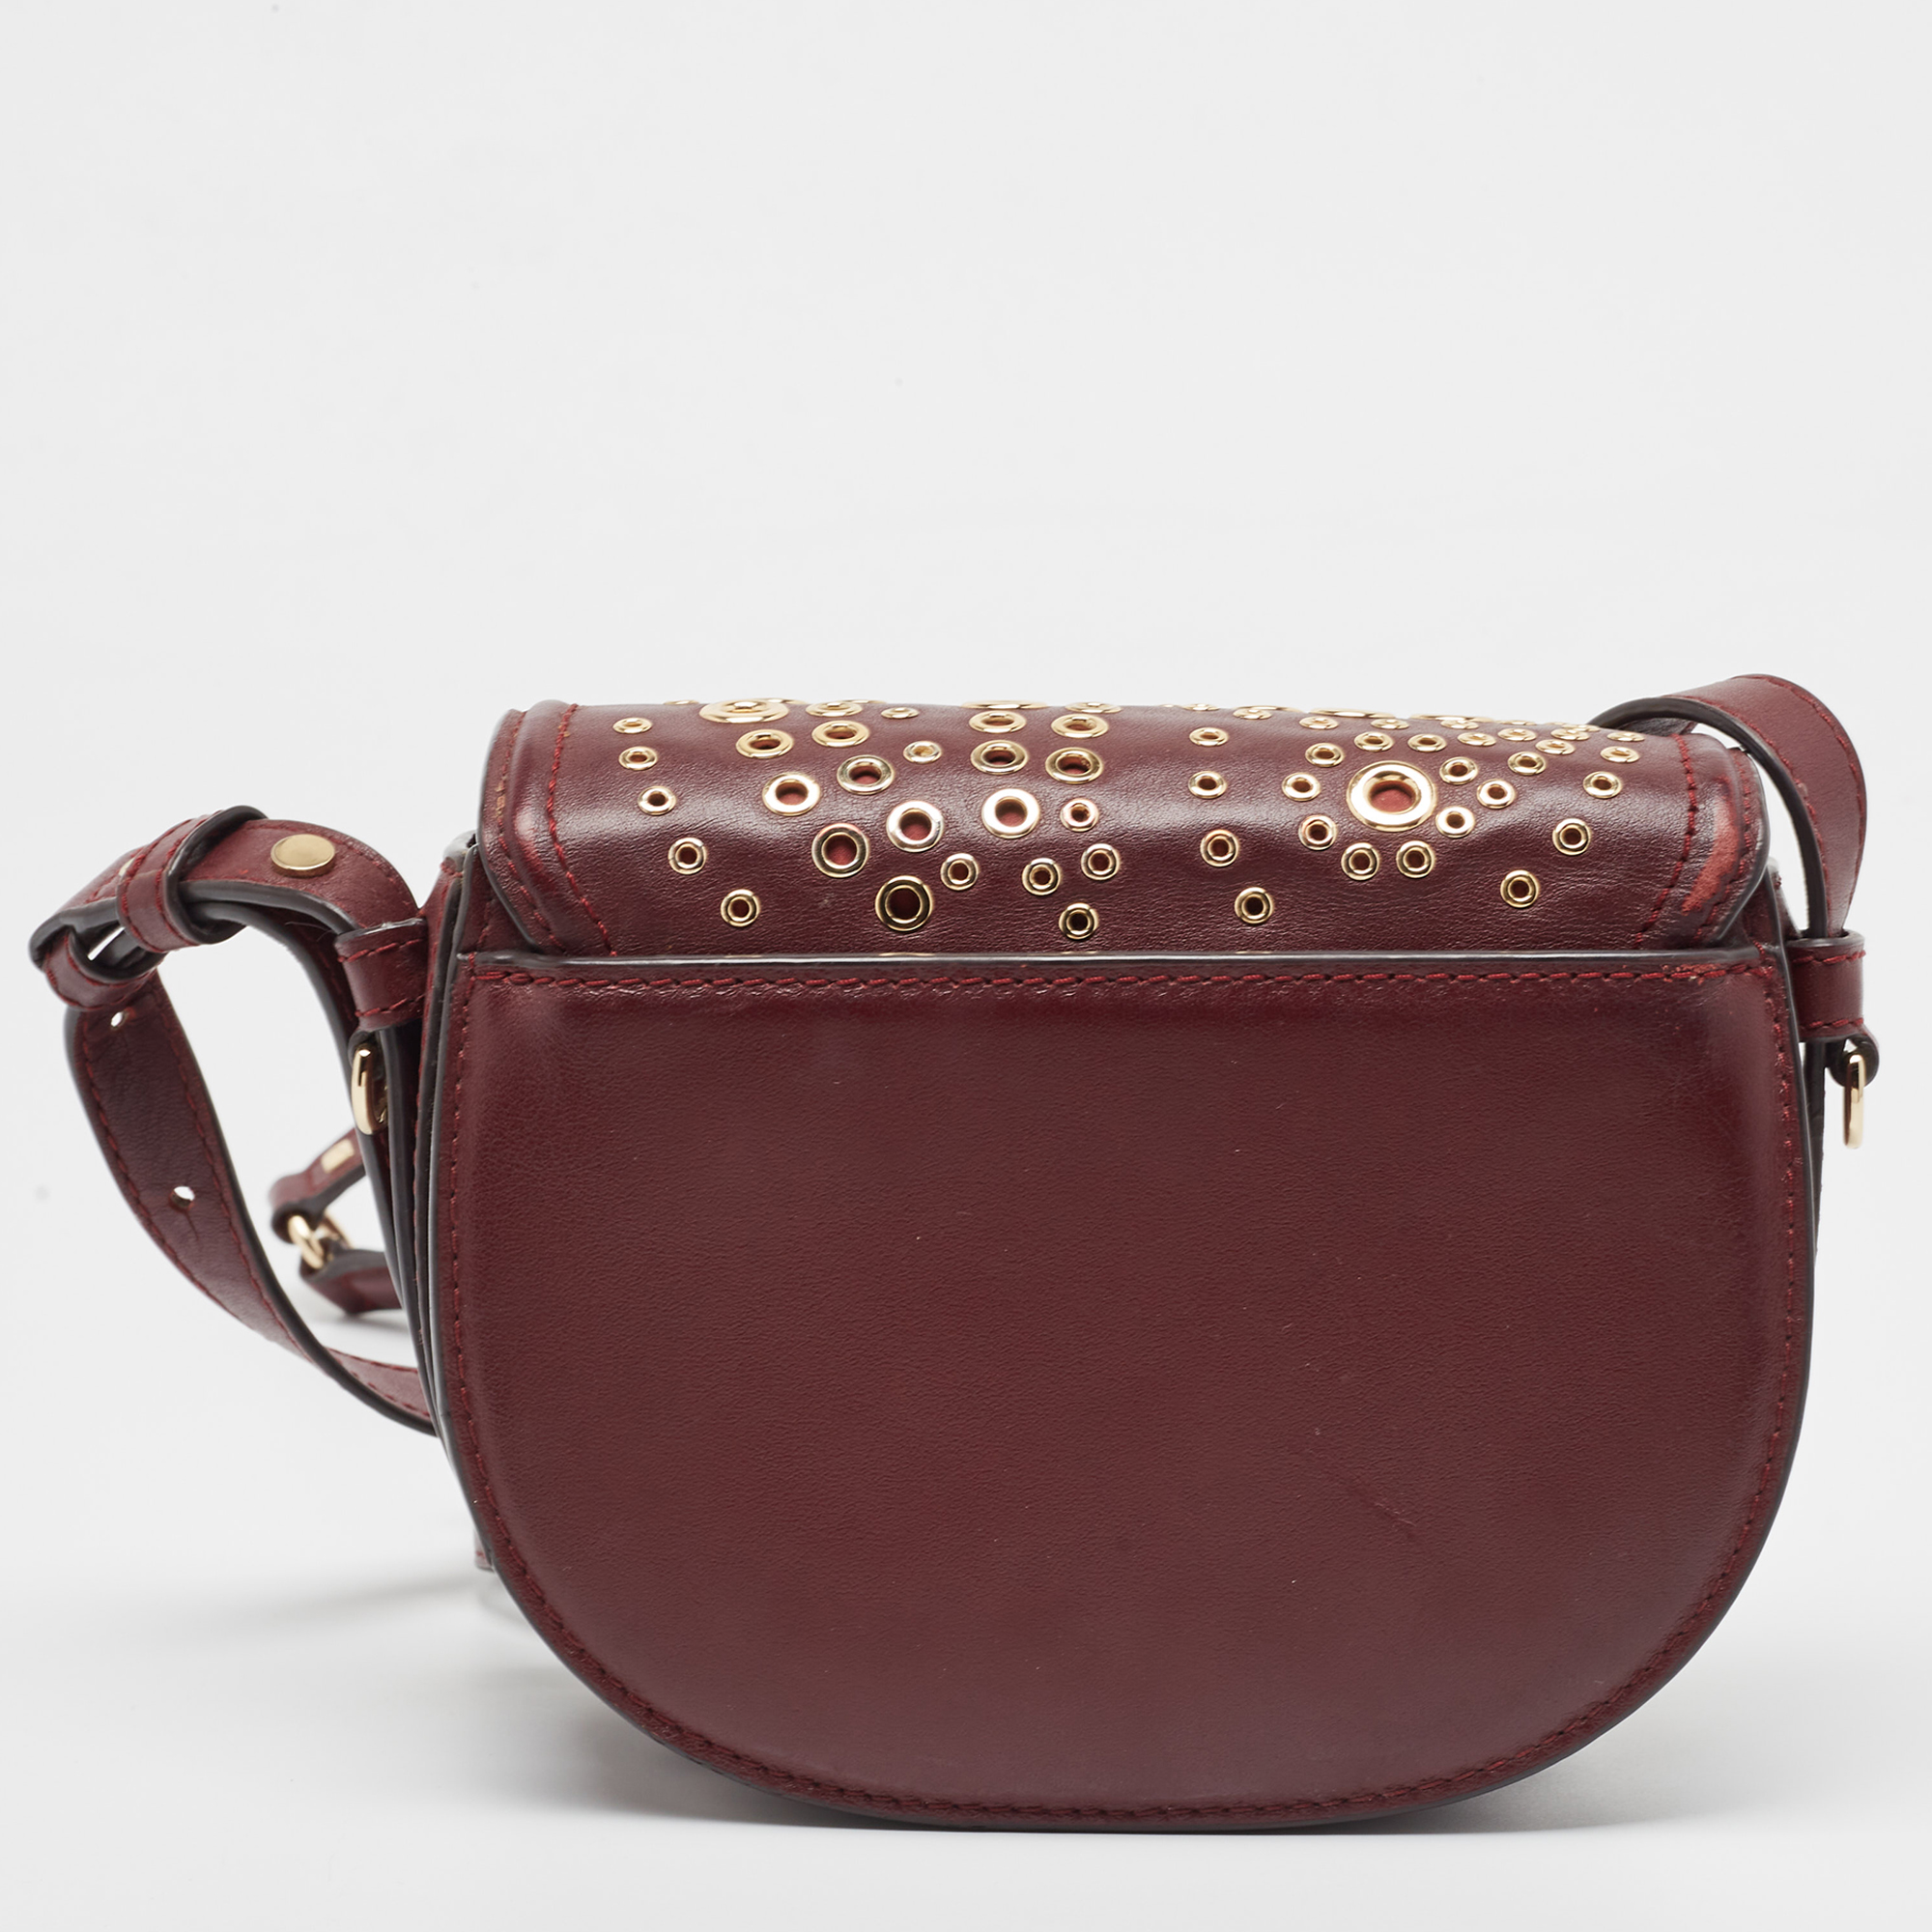 MICHAEL KORS Burgundy Leather Eyelet Embellished Flap Crossbody Bag